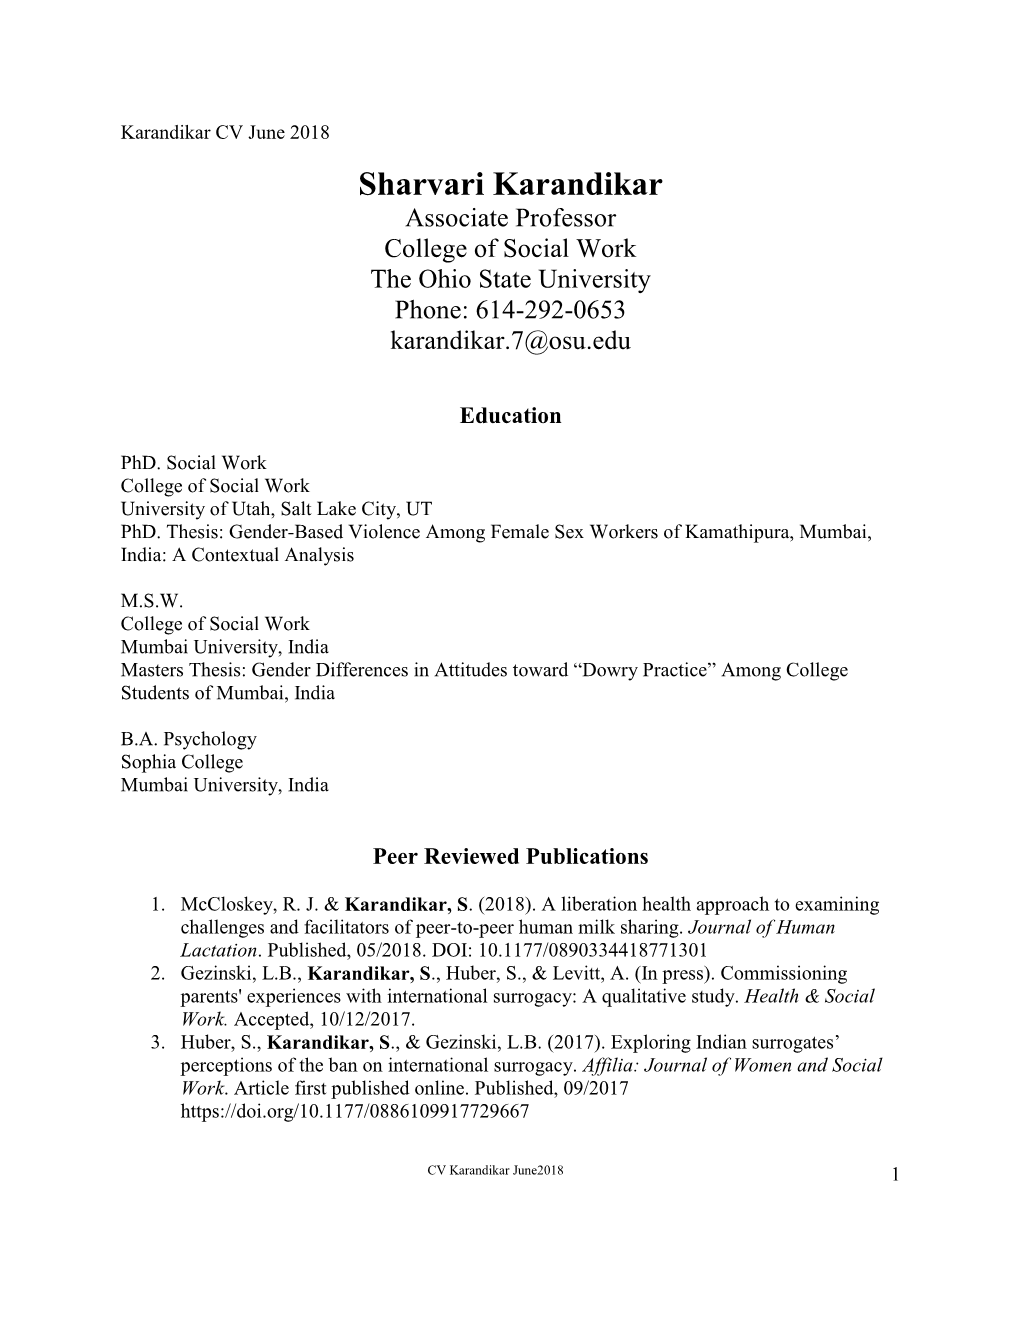 Sharvari Karandikar Associate Professor College of Social Work the Ohio State University Phone: 614-292-0653 Karandikar.7@Osu.Edu